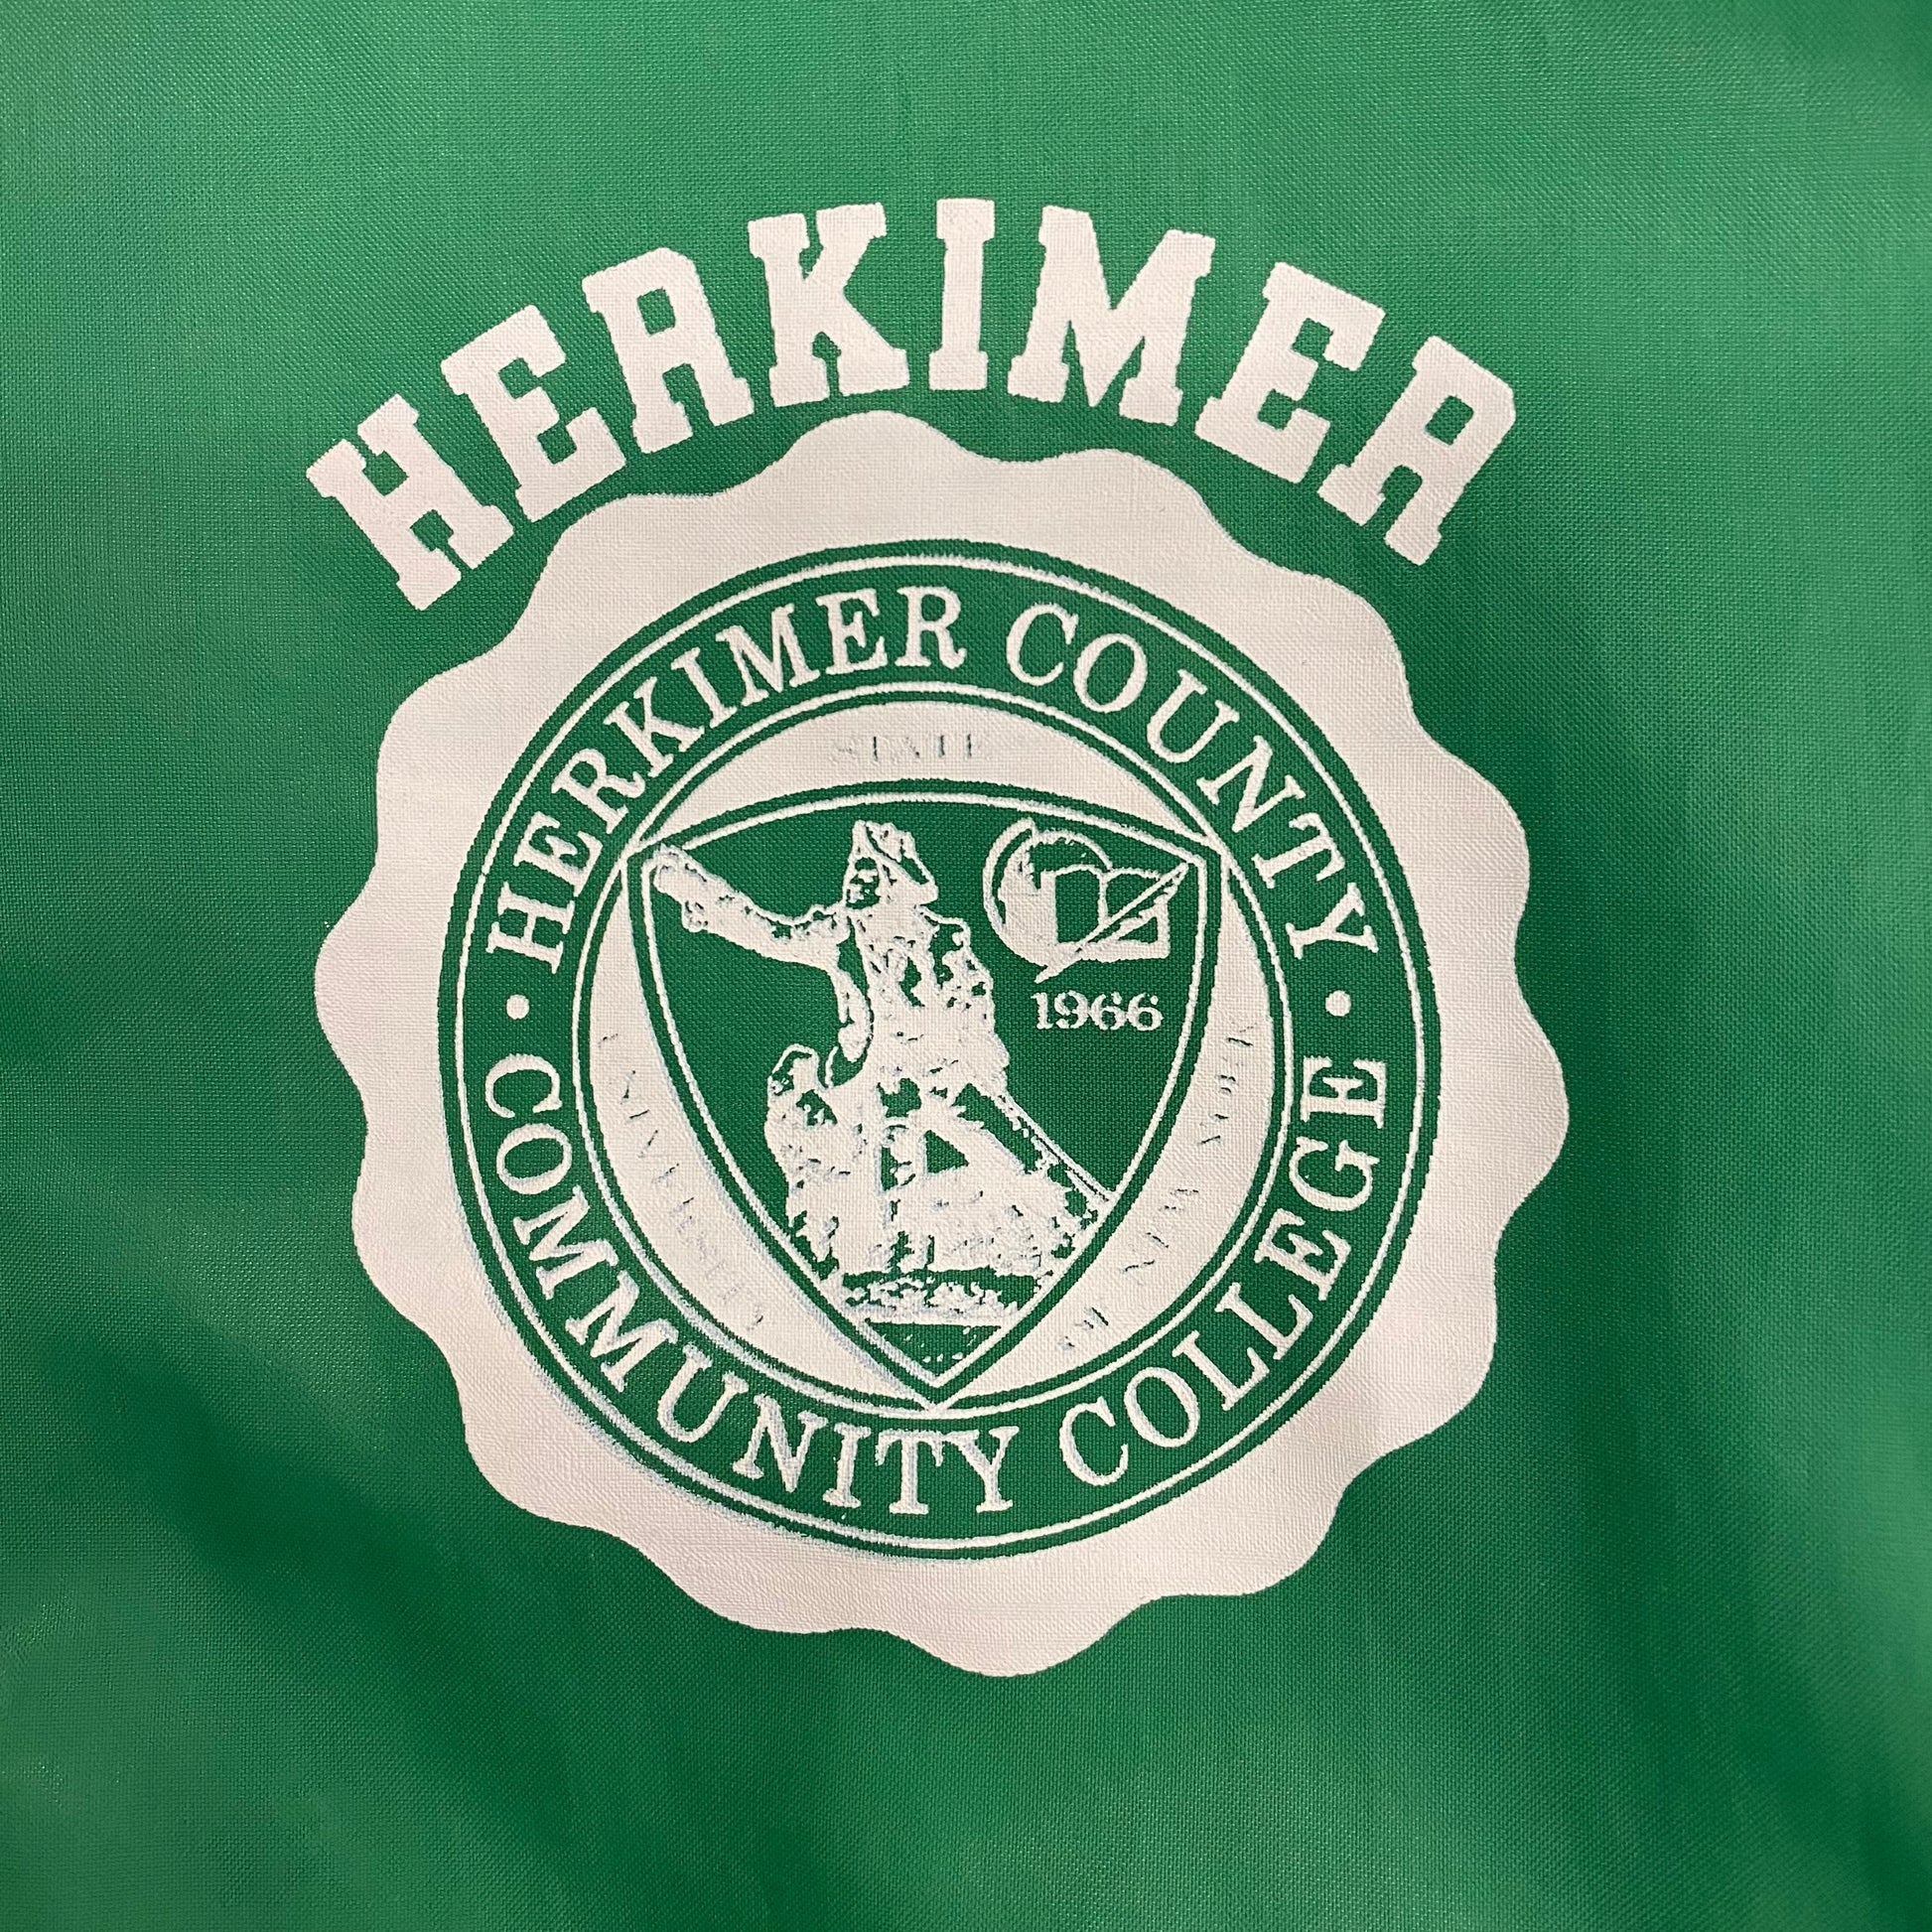 J Vintage 80s/90s Herkimer County Community College Green Bomber Jacket - Size Medium